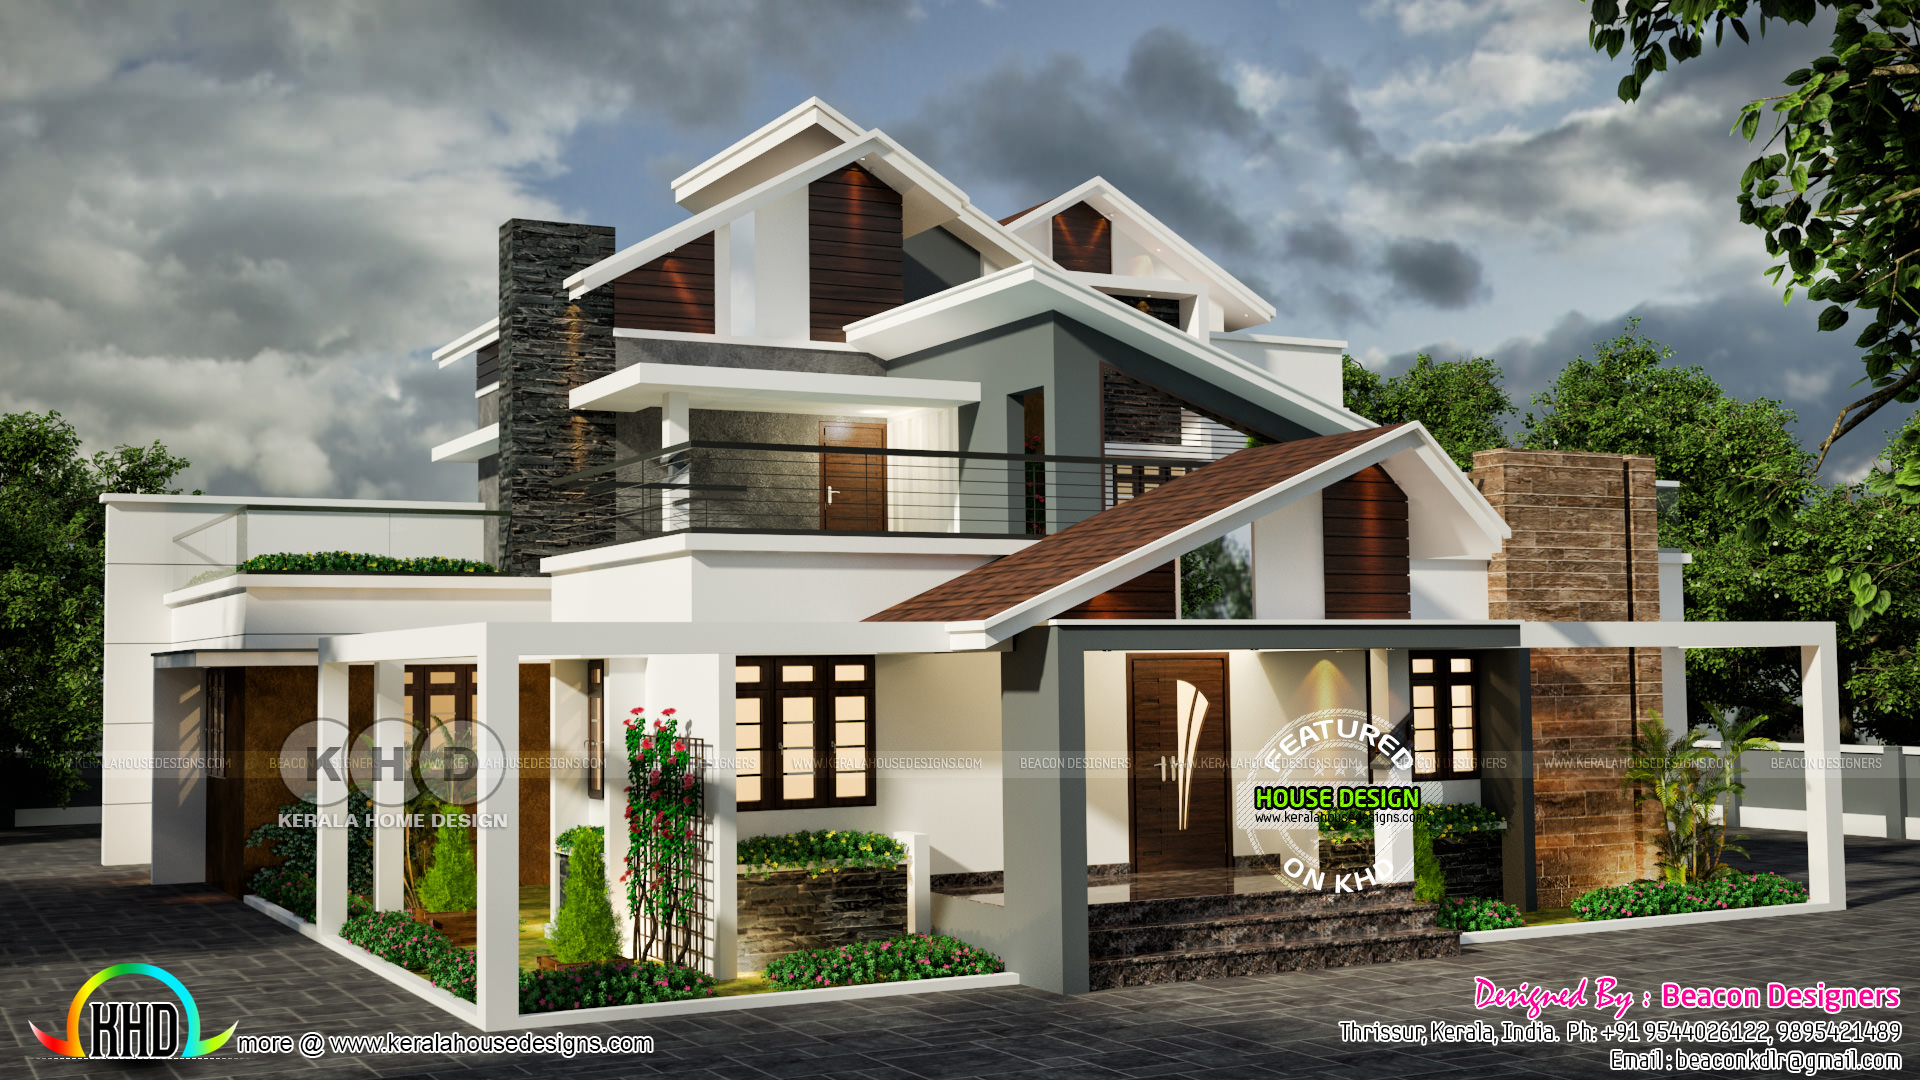  4  bedroom  ultra modern  house  2500 sq ft Kerala home  